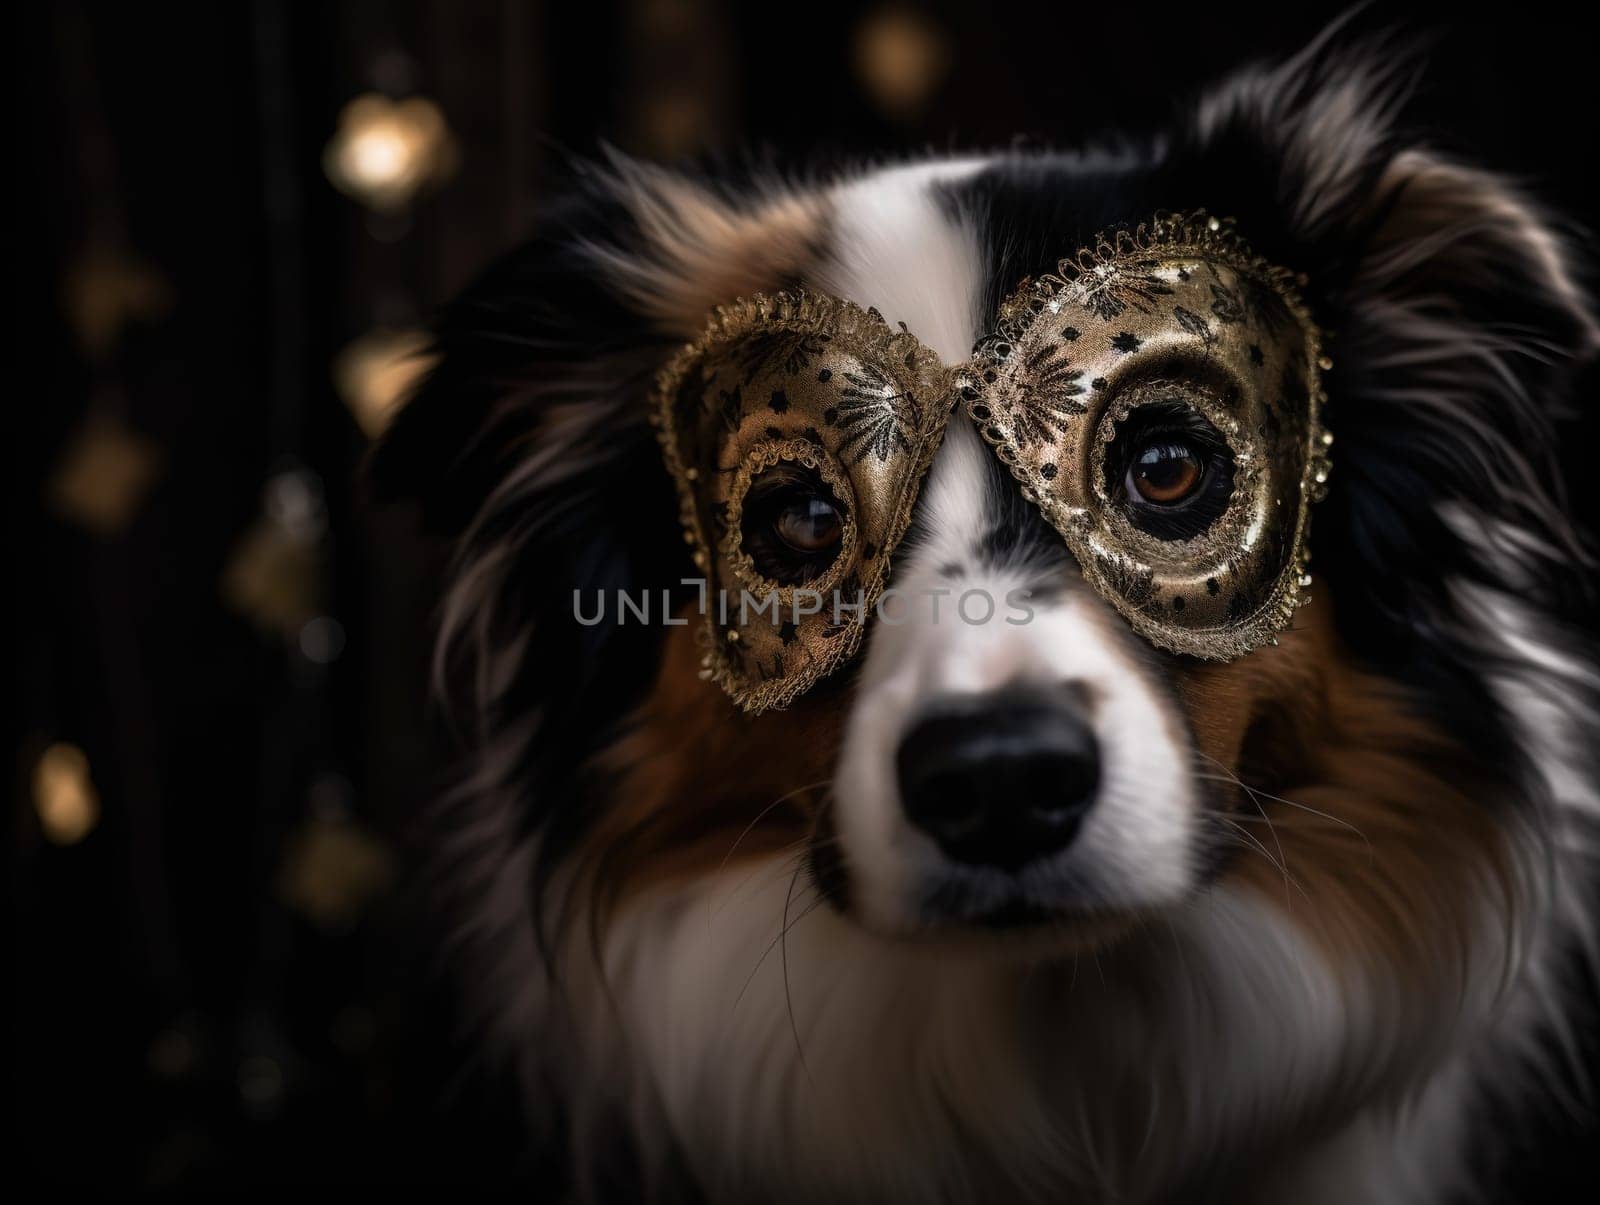 Carnival Mask-Wearing Dog Sits Against Blurred Living Room Background